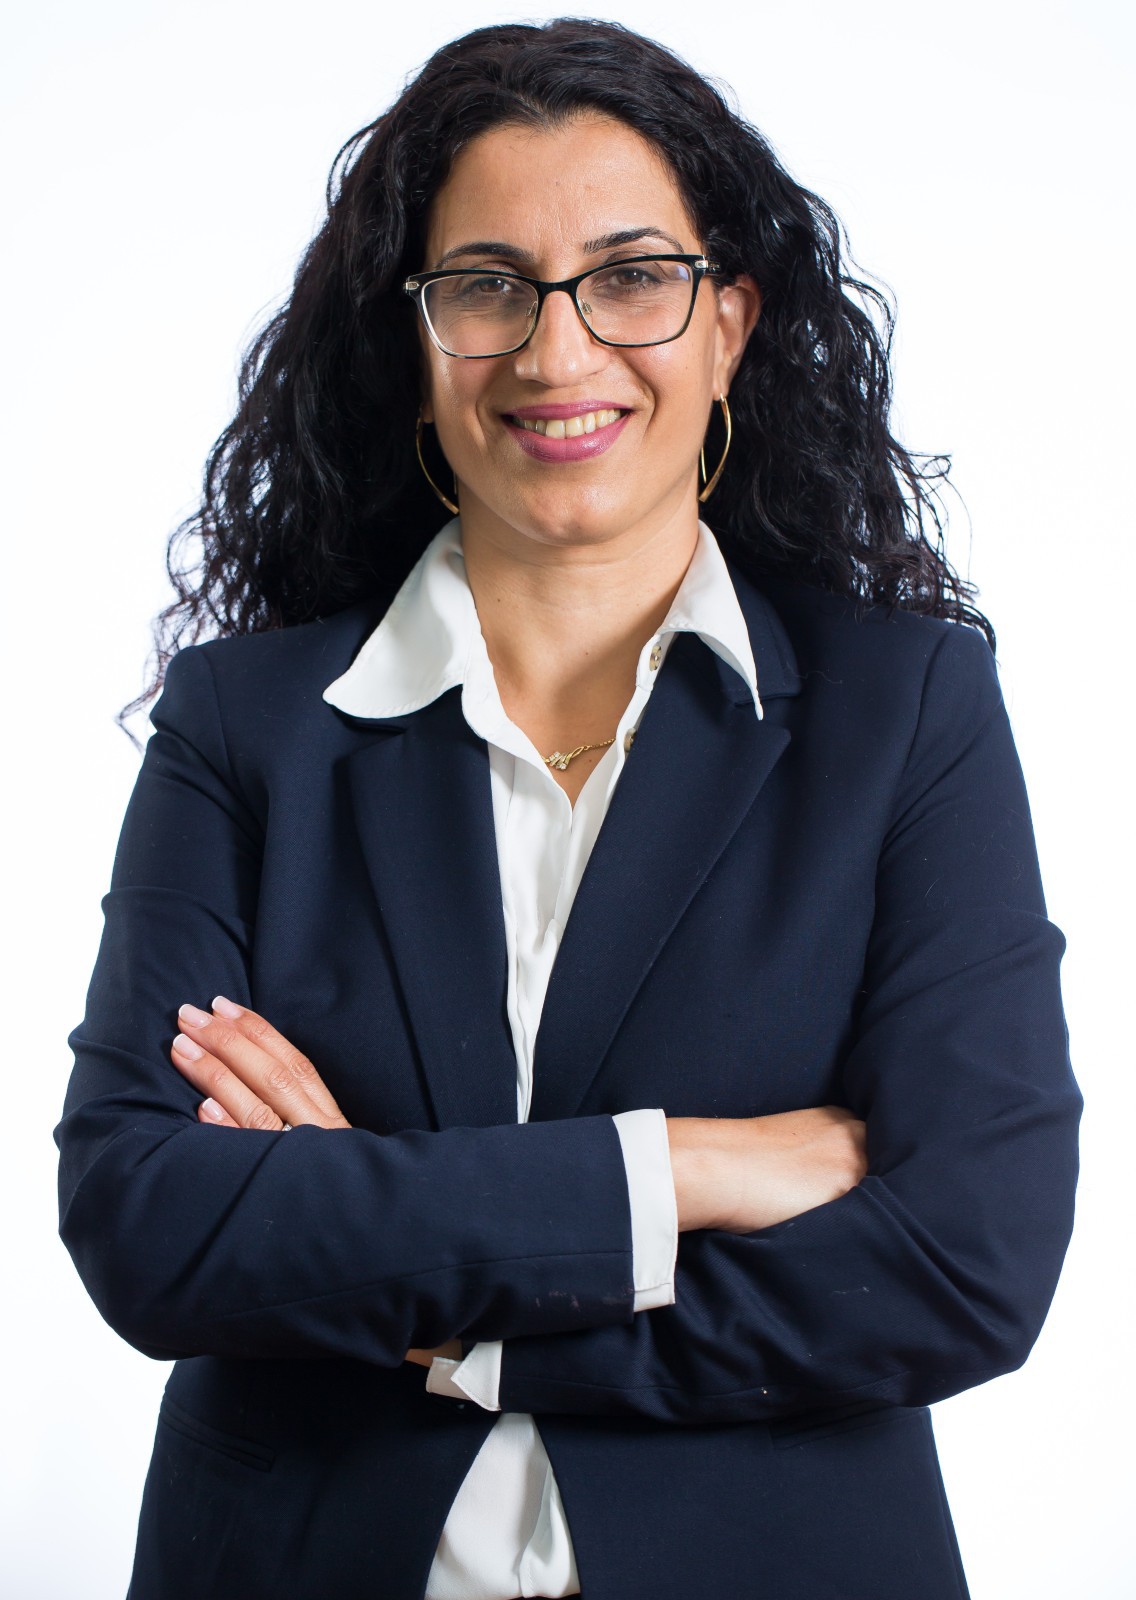 Racheli Vizman is CEO and co-founder of Savor Eat